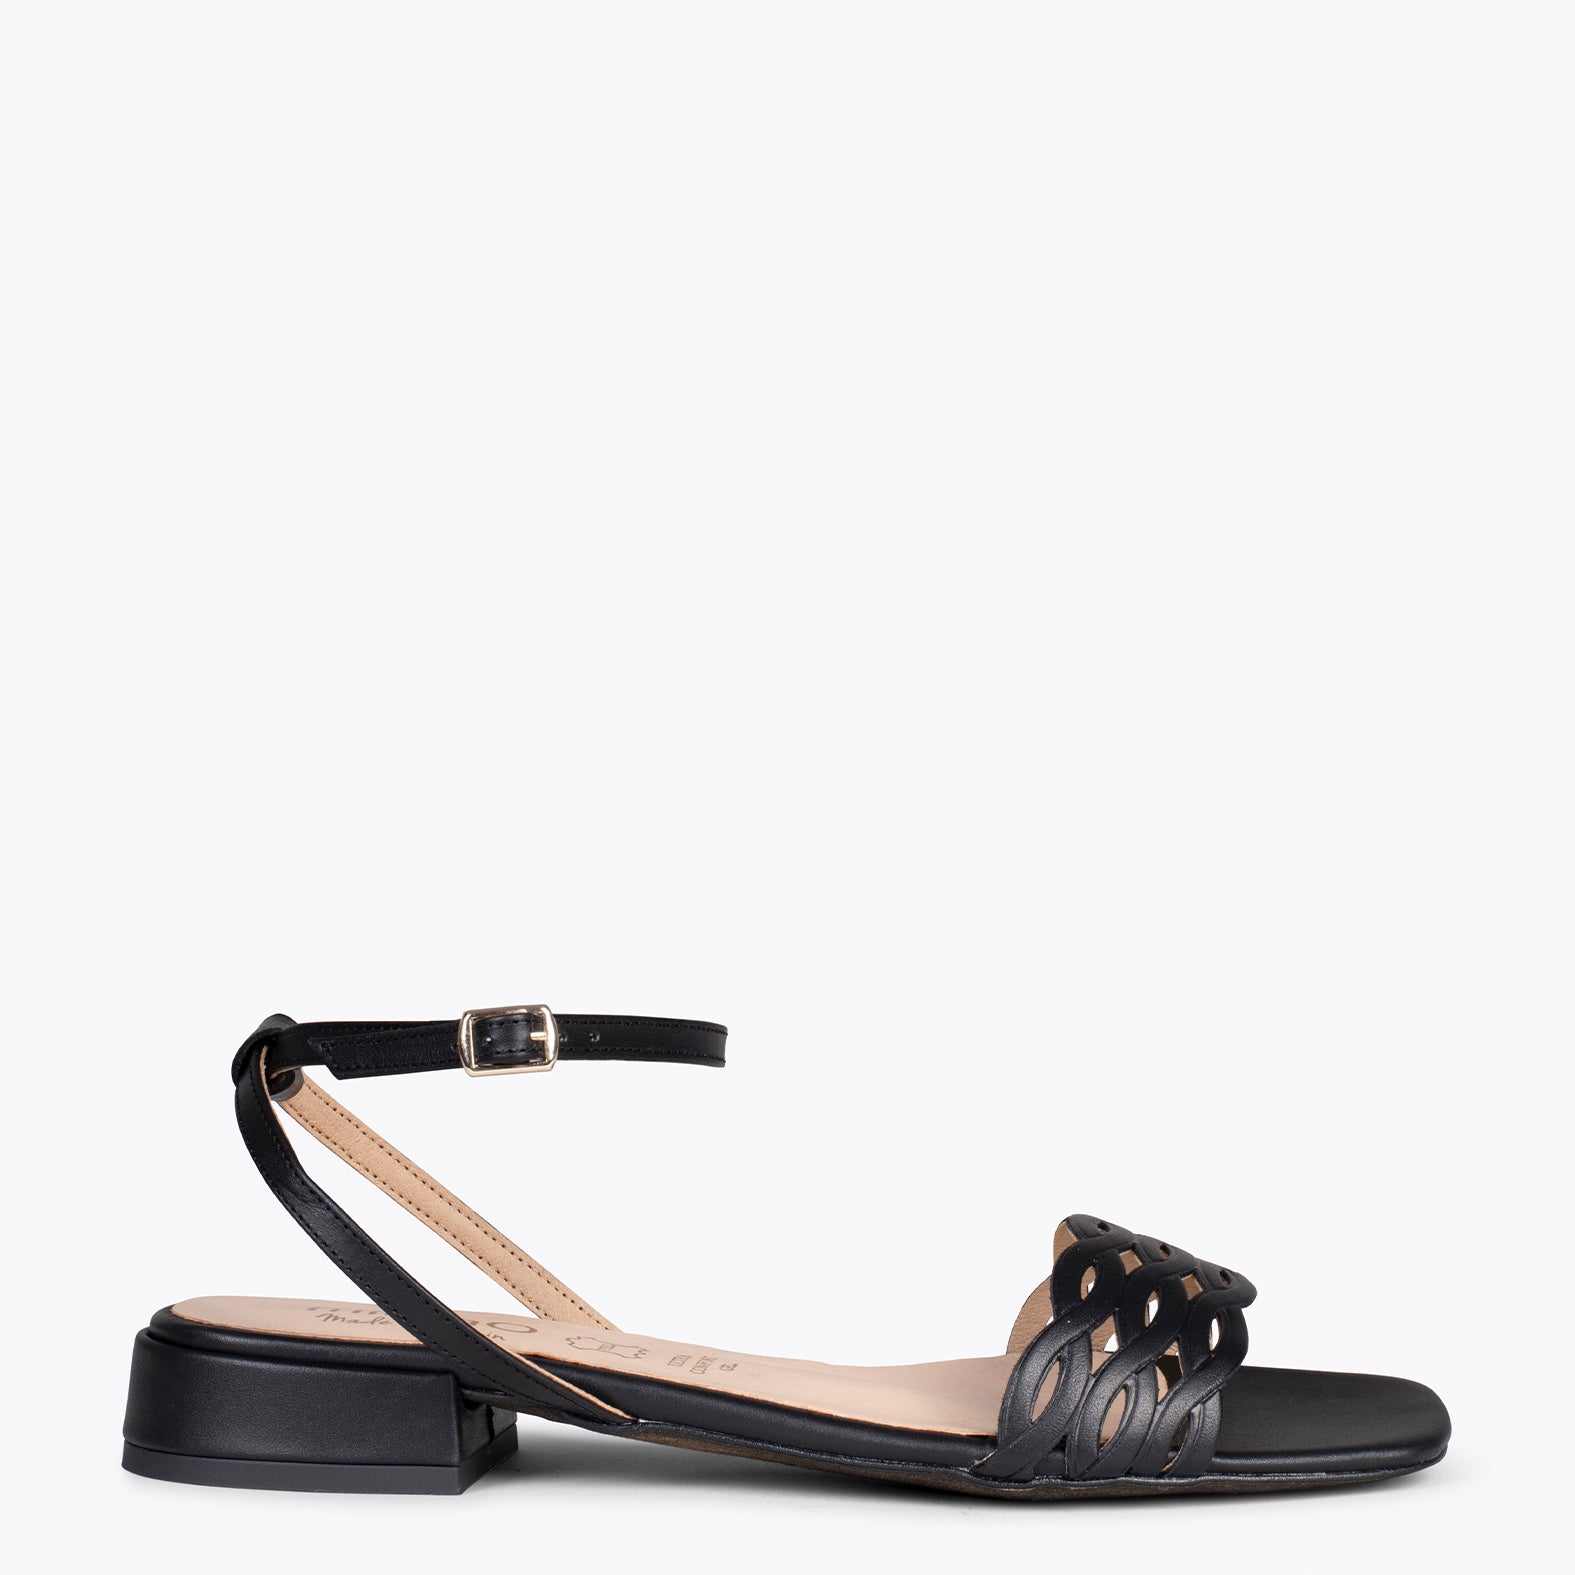 SOFIA – BLACK flat sandals